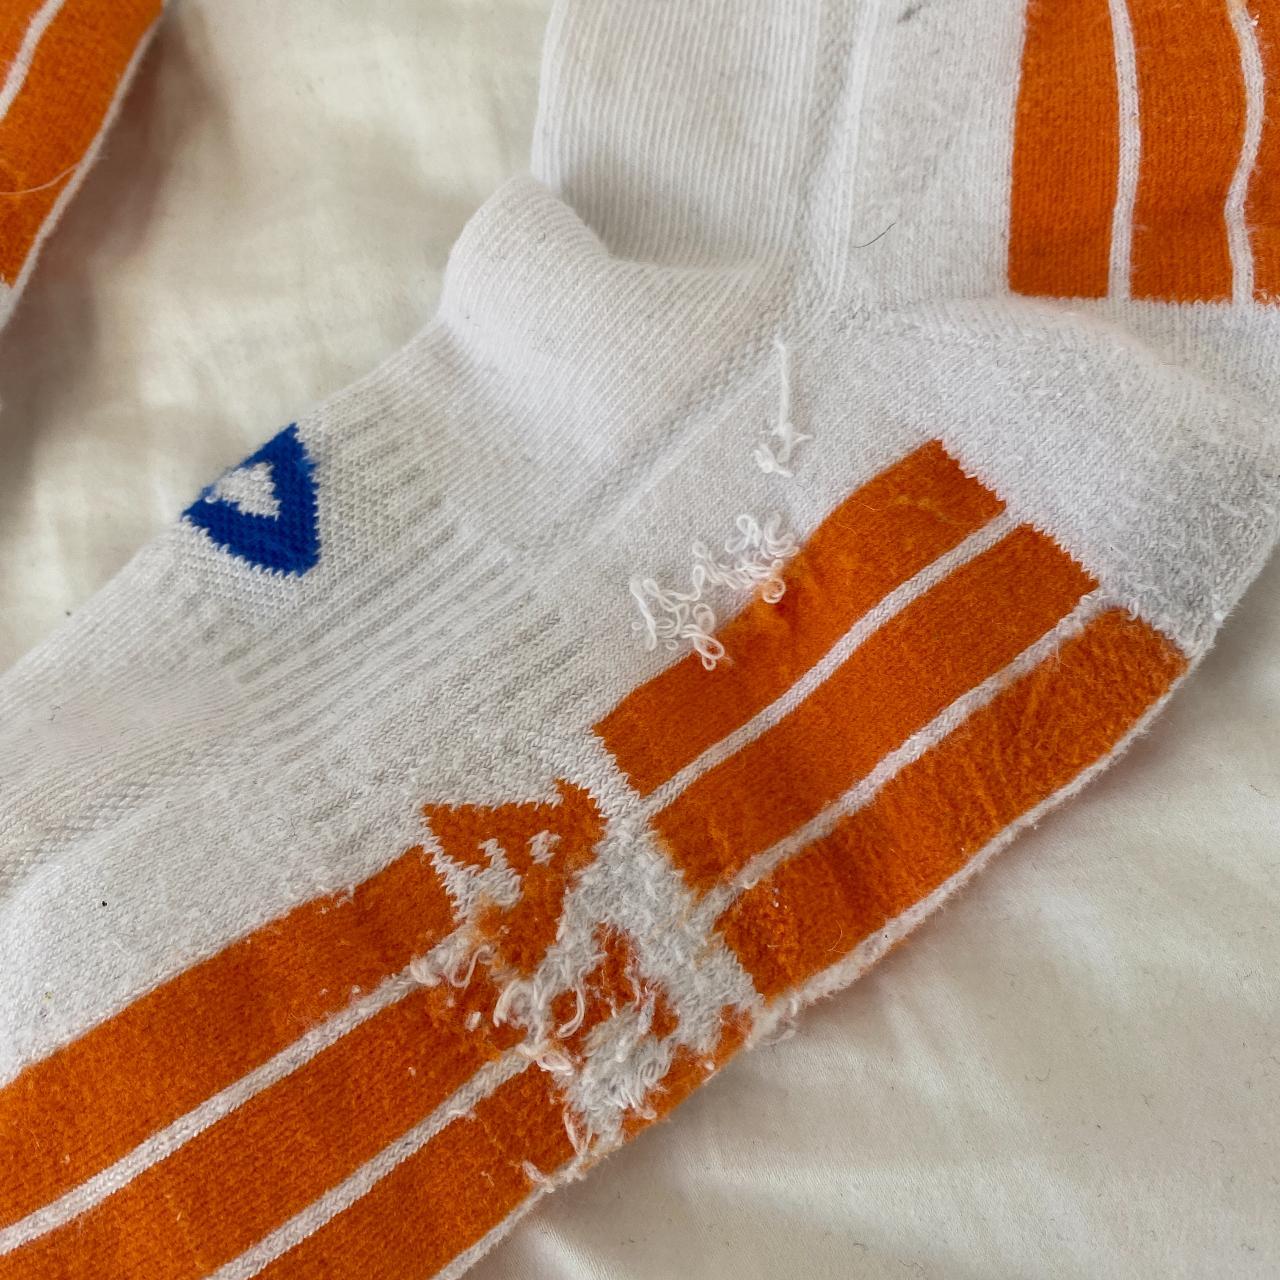 Aries Men's White and Orange Socks (3)